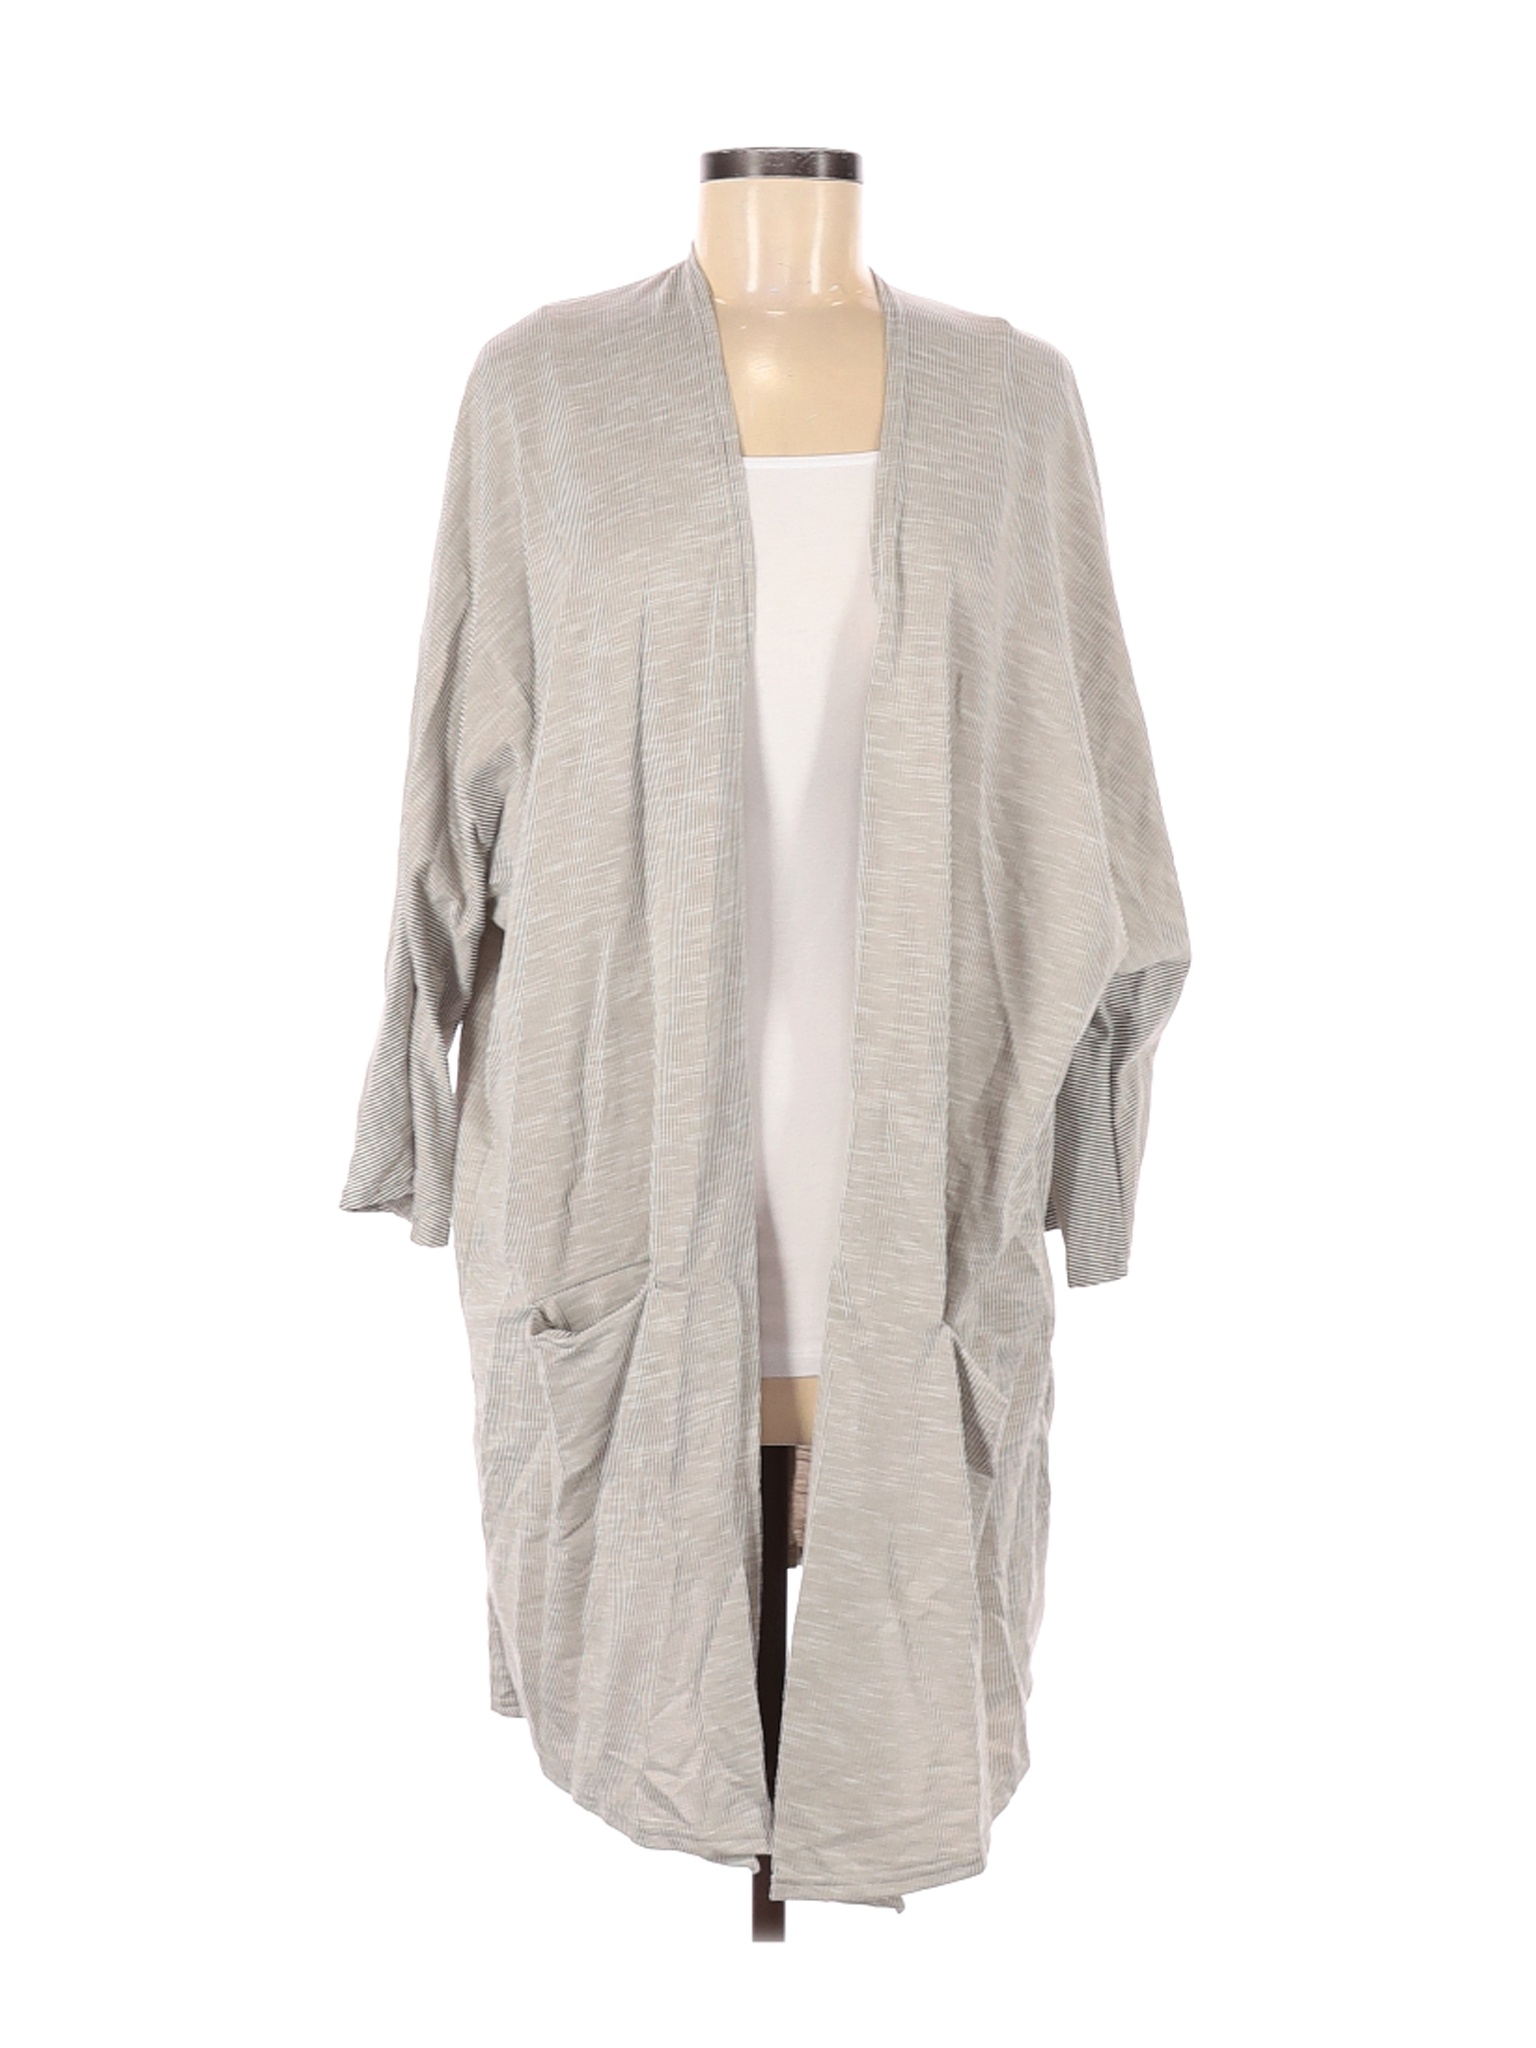 NWT DONNI Women Brown Cardigan One Size Plus | eBay